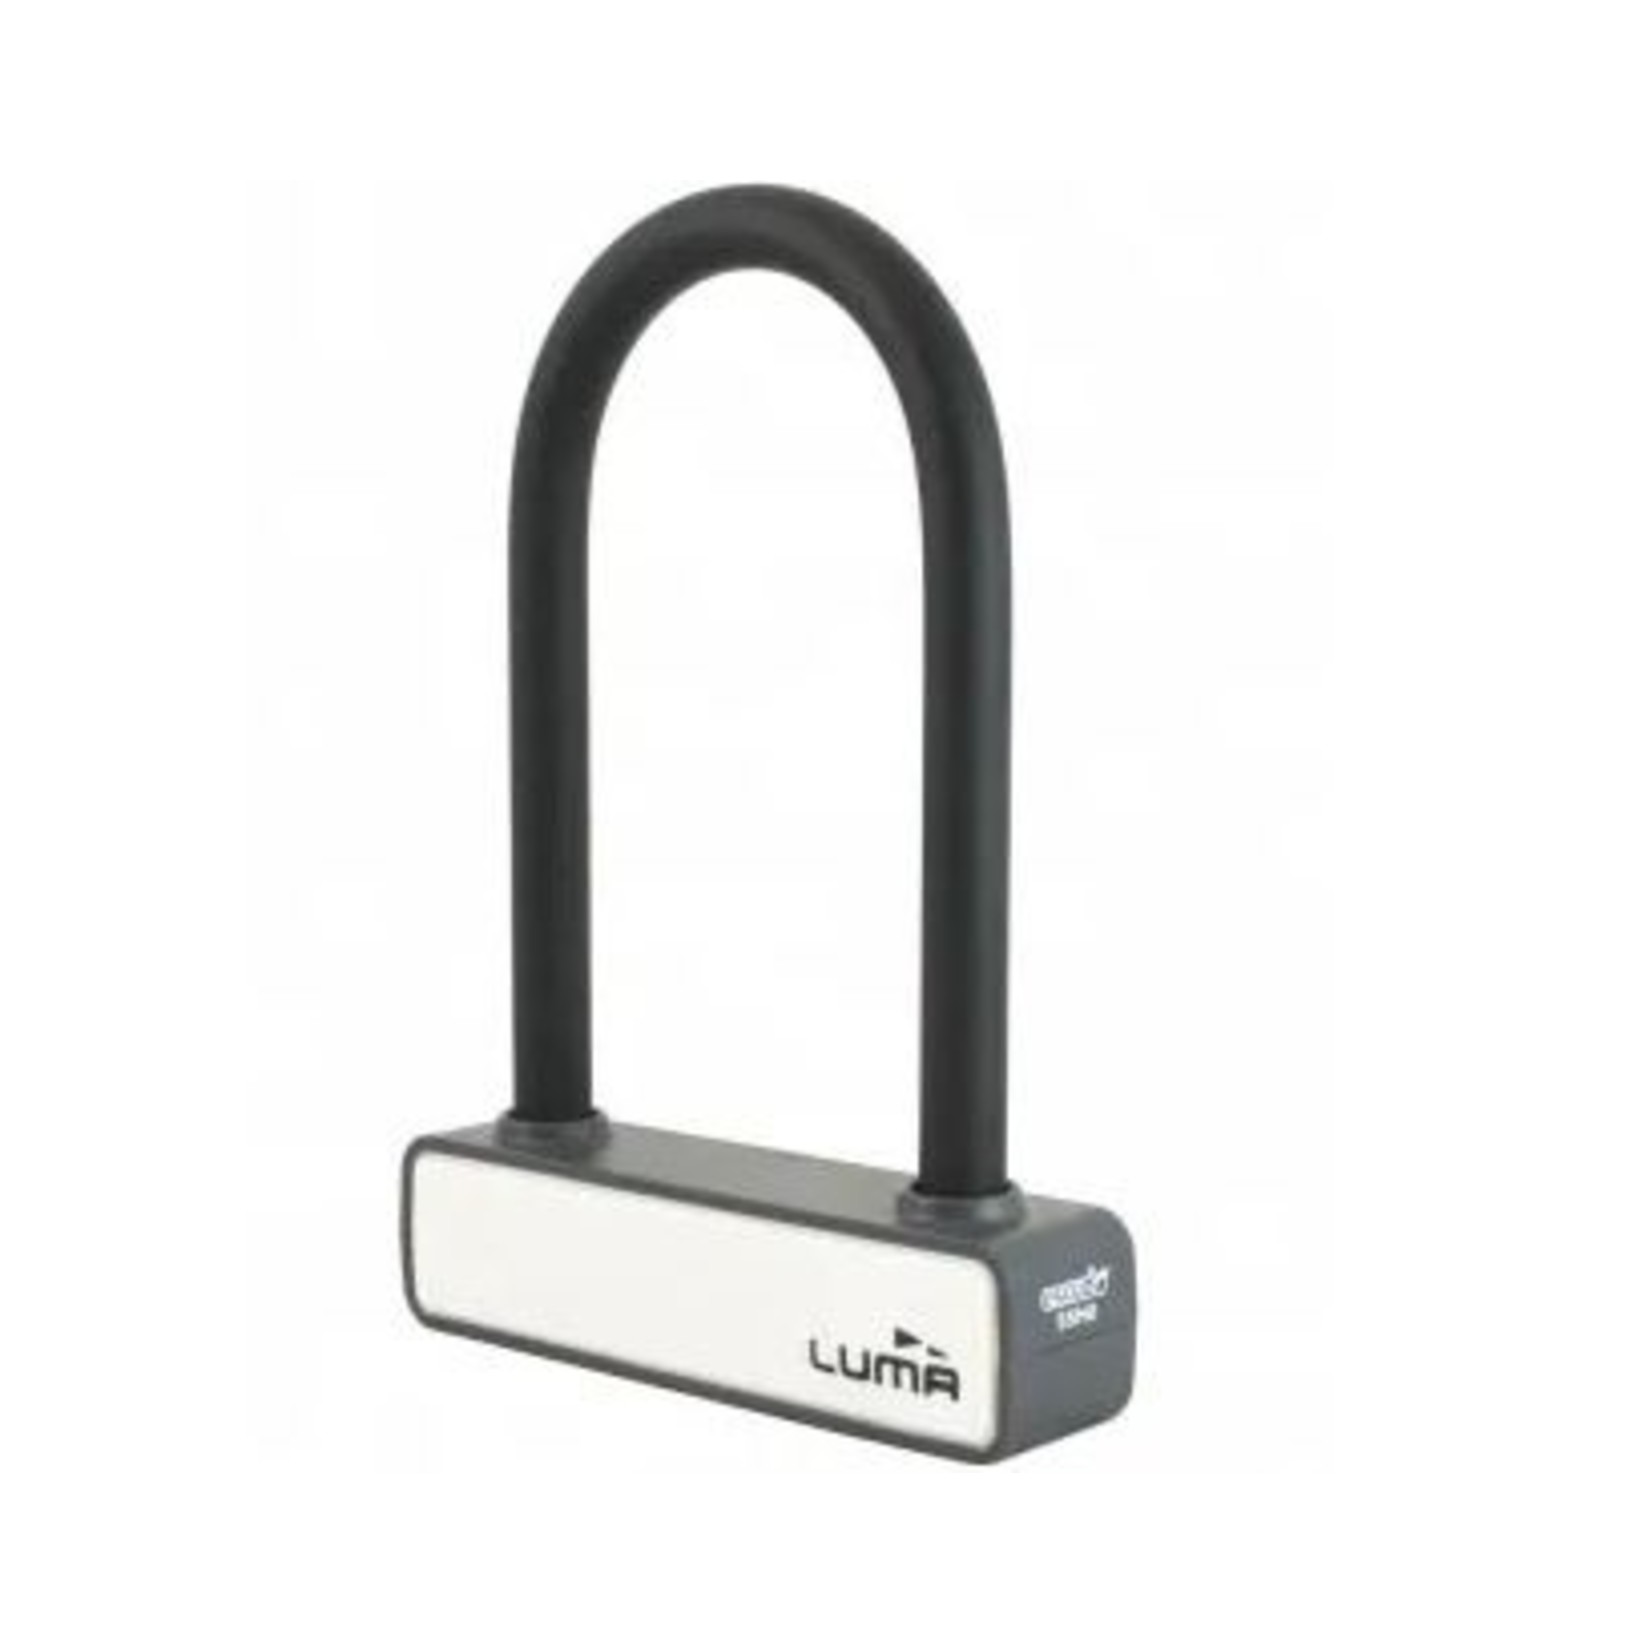 Luma Luma Bike/Cycling Lock - High Security U-Lock - 175 X 320mm - 16mm Bar Thickness